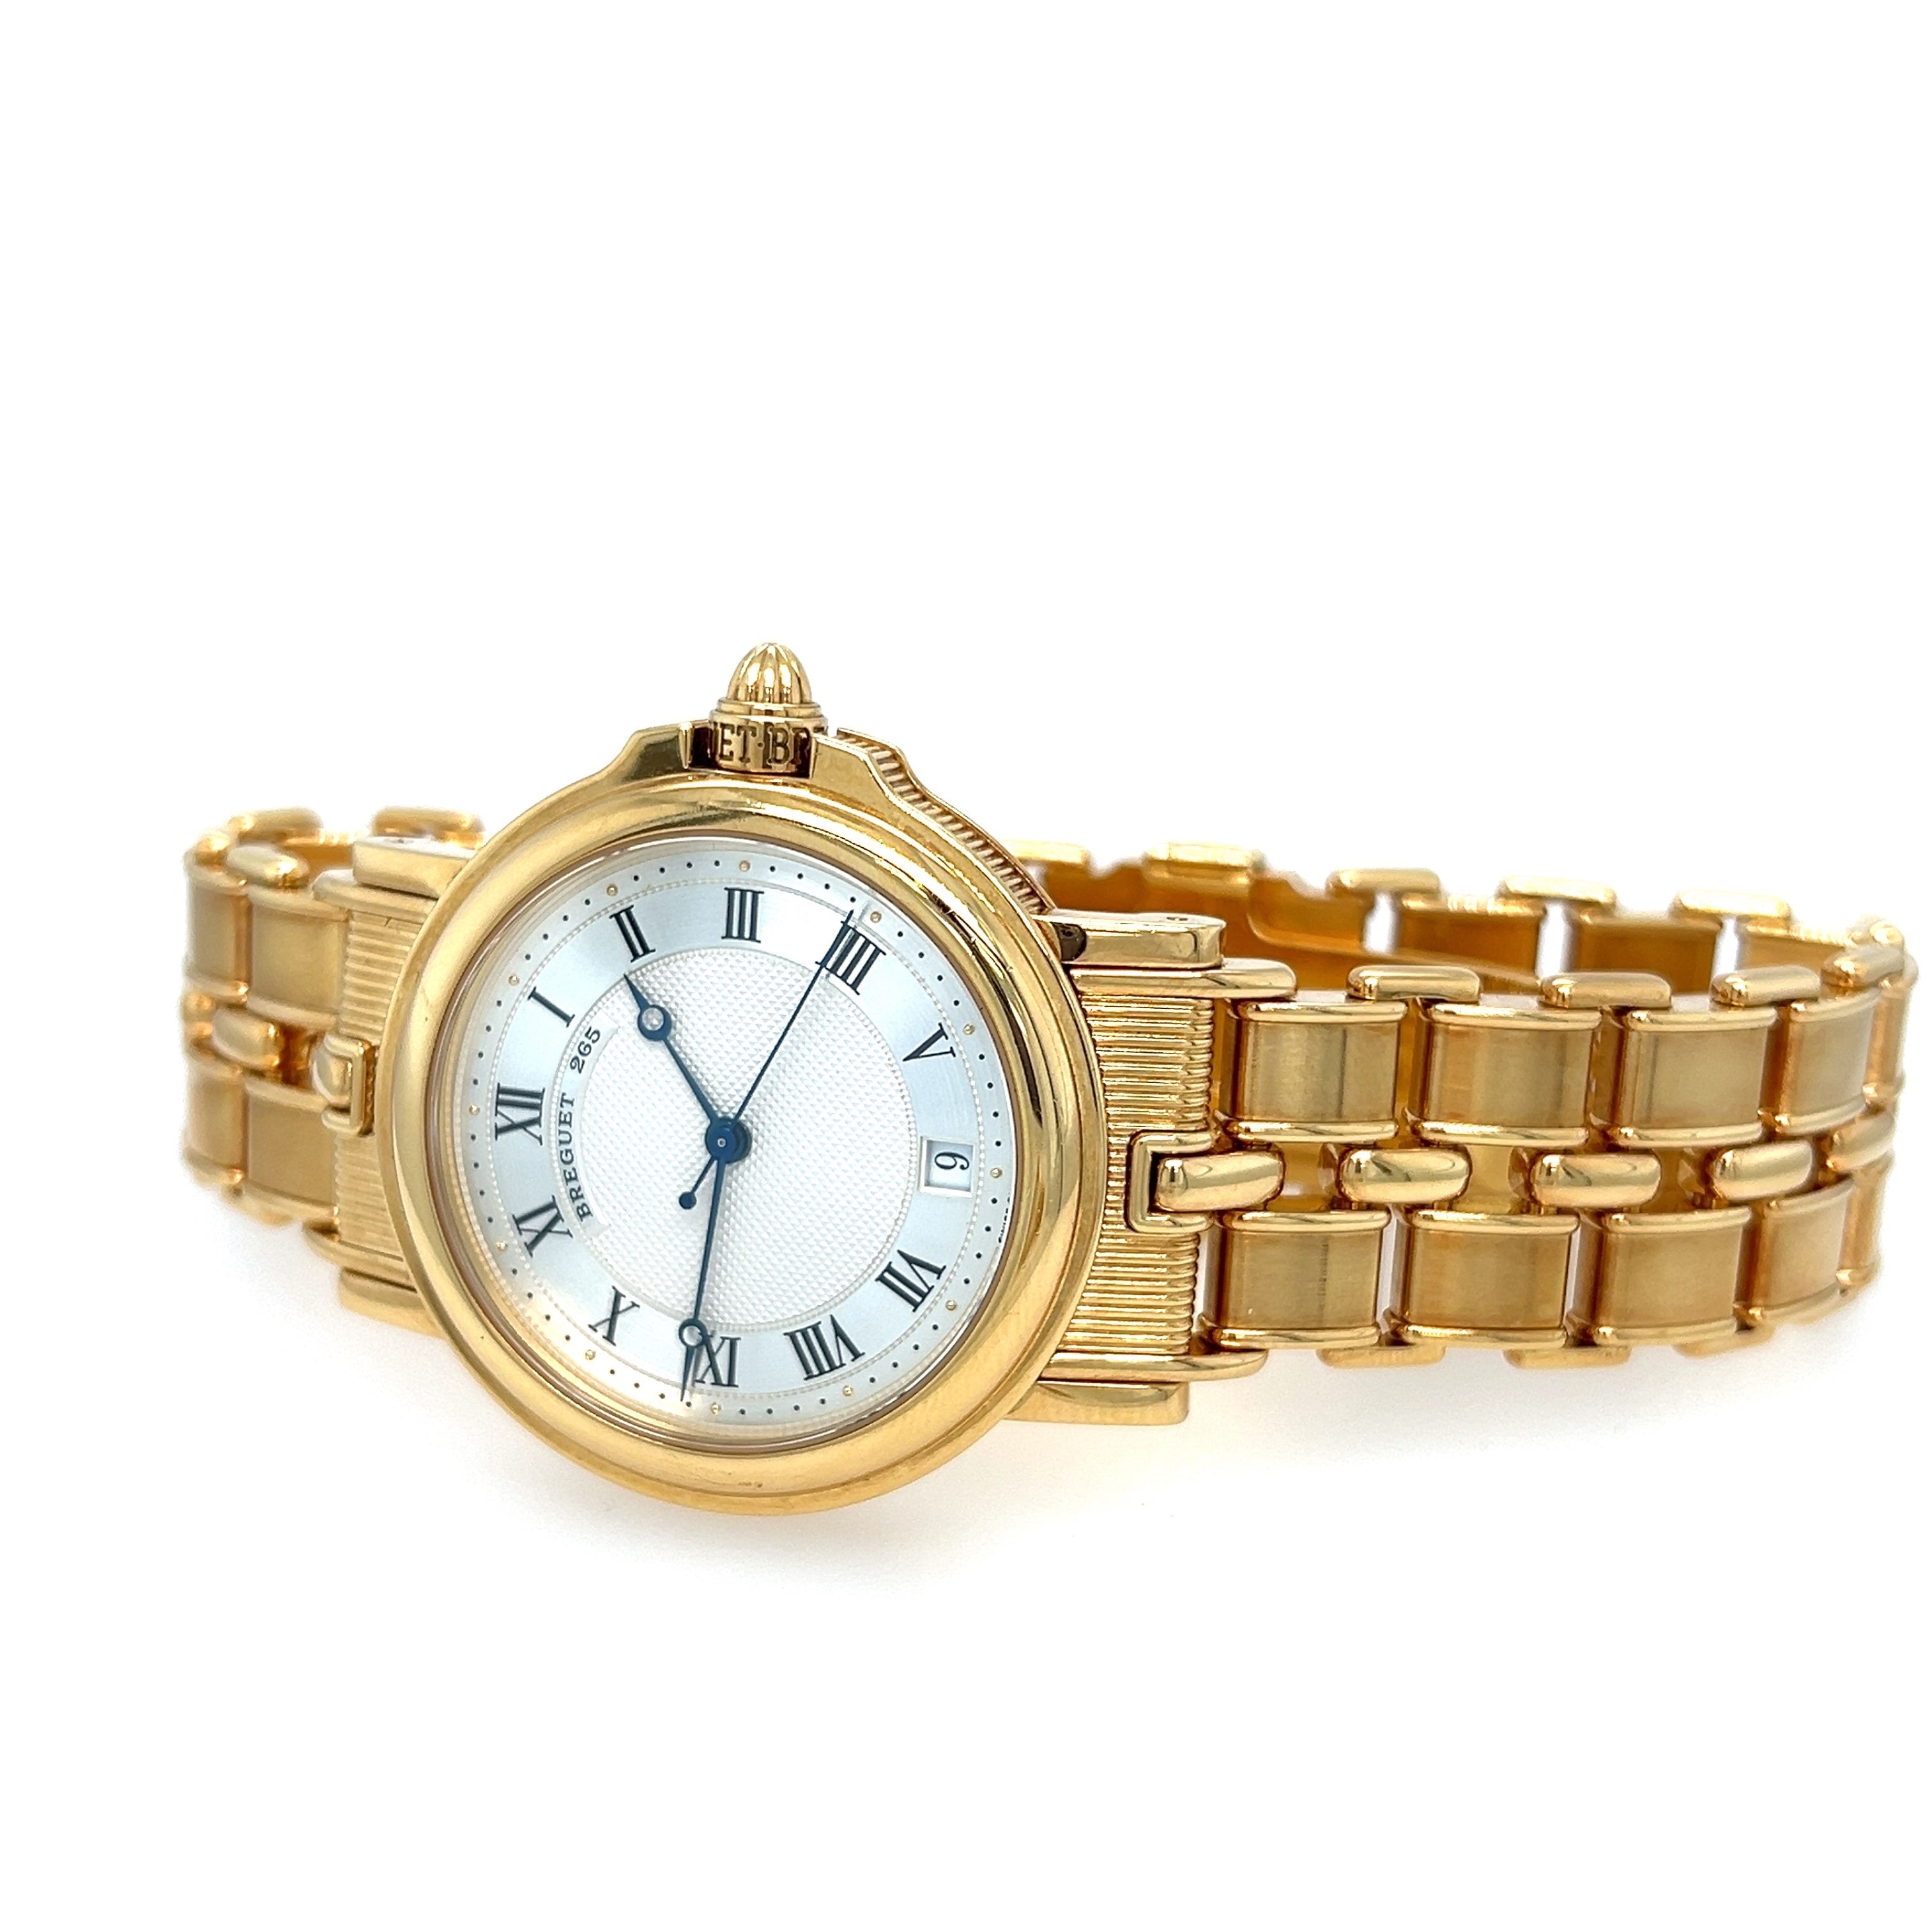 Breguet Yellow Gold 18k Marine Automatic Watch | I&I Diamonds in Coconut Creek, FL